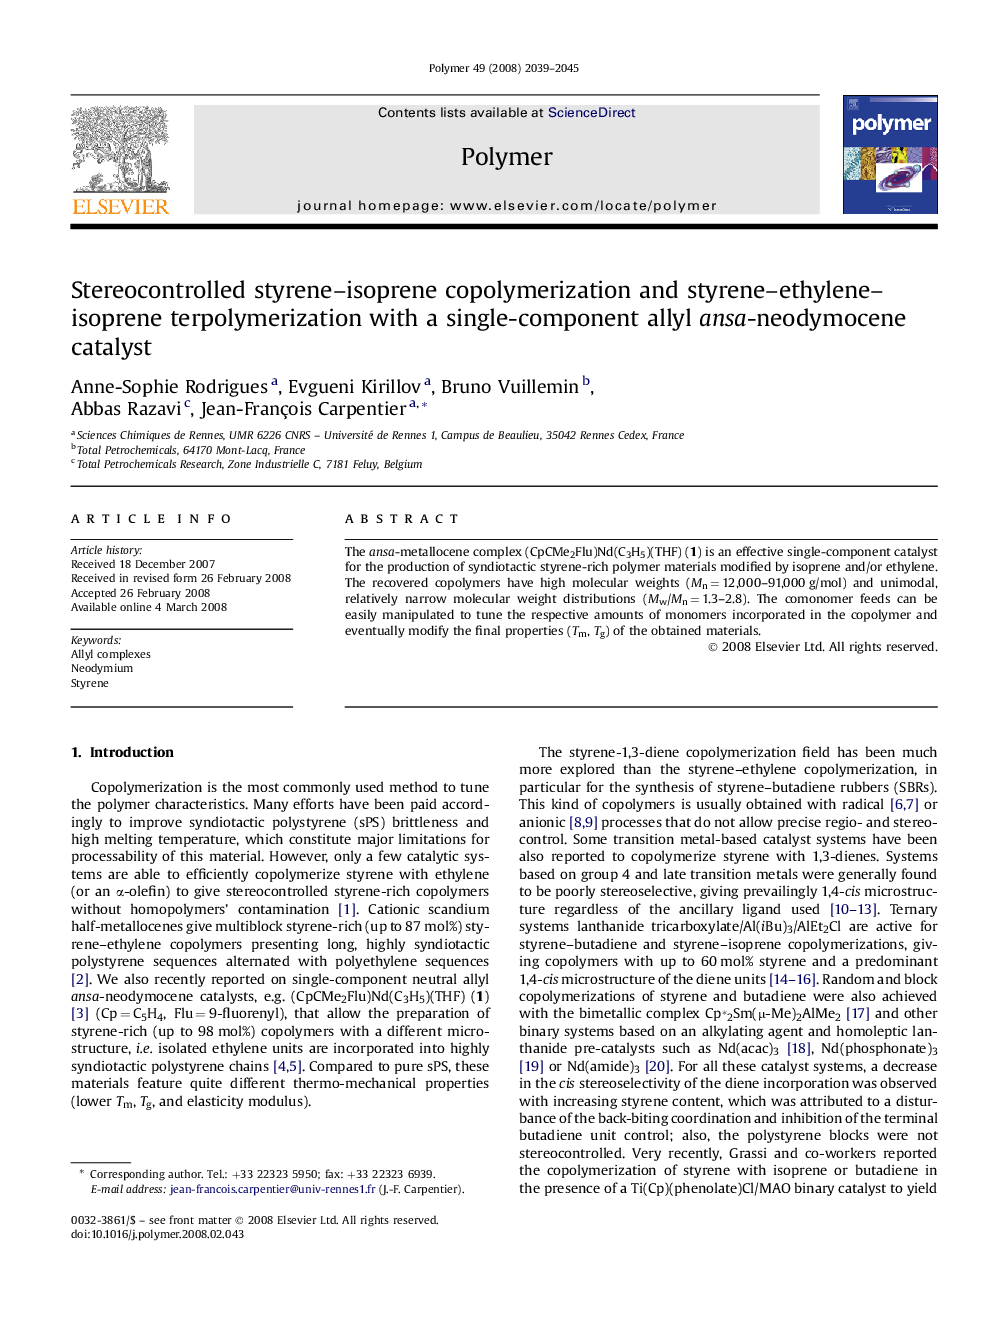 Stereocontrolled styrene-isoprene copolymerization and styrene-ethylene-isoprene terpolymerization with a single-component allyl ansa-neodymocene catalyst